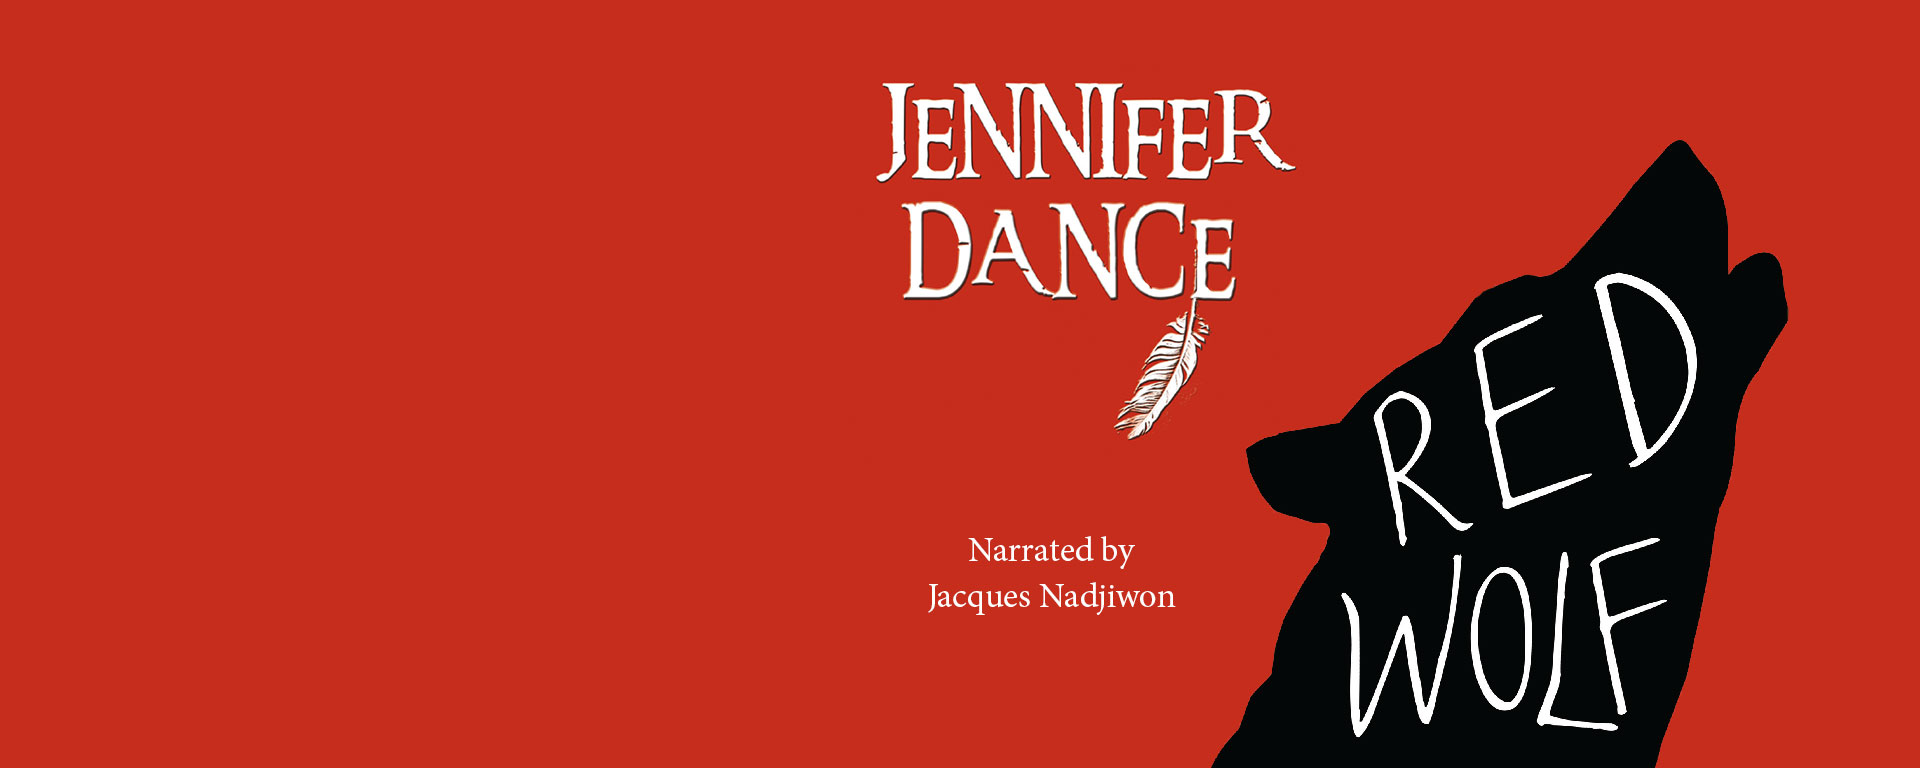 Red Wolf by Jennifer Dance